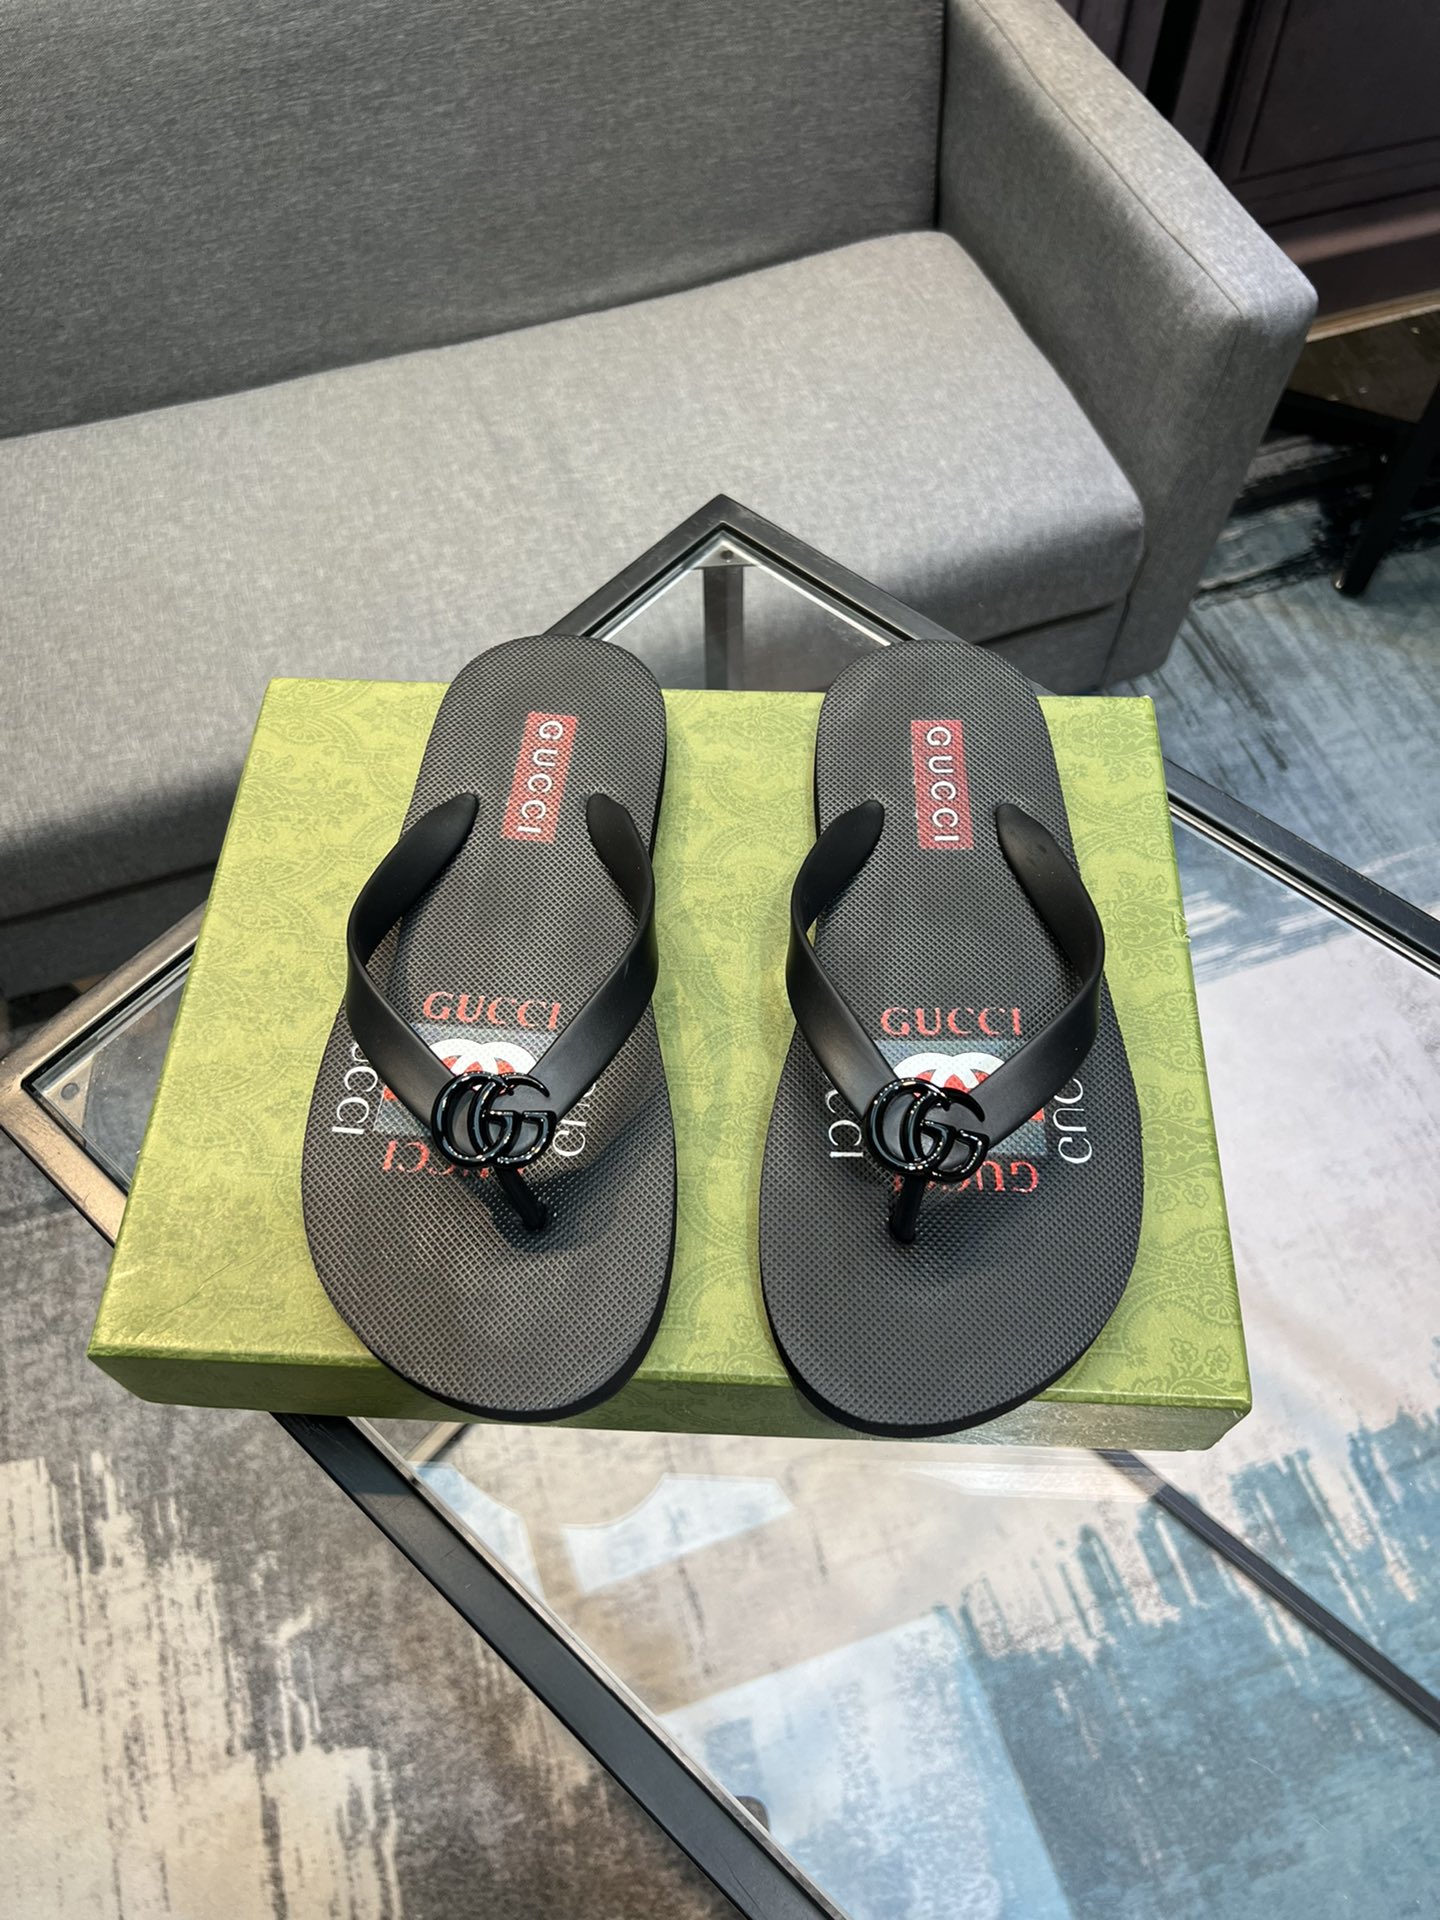 Gucci Shoes Flip Flops Slippers Best Wholesale Replica